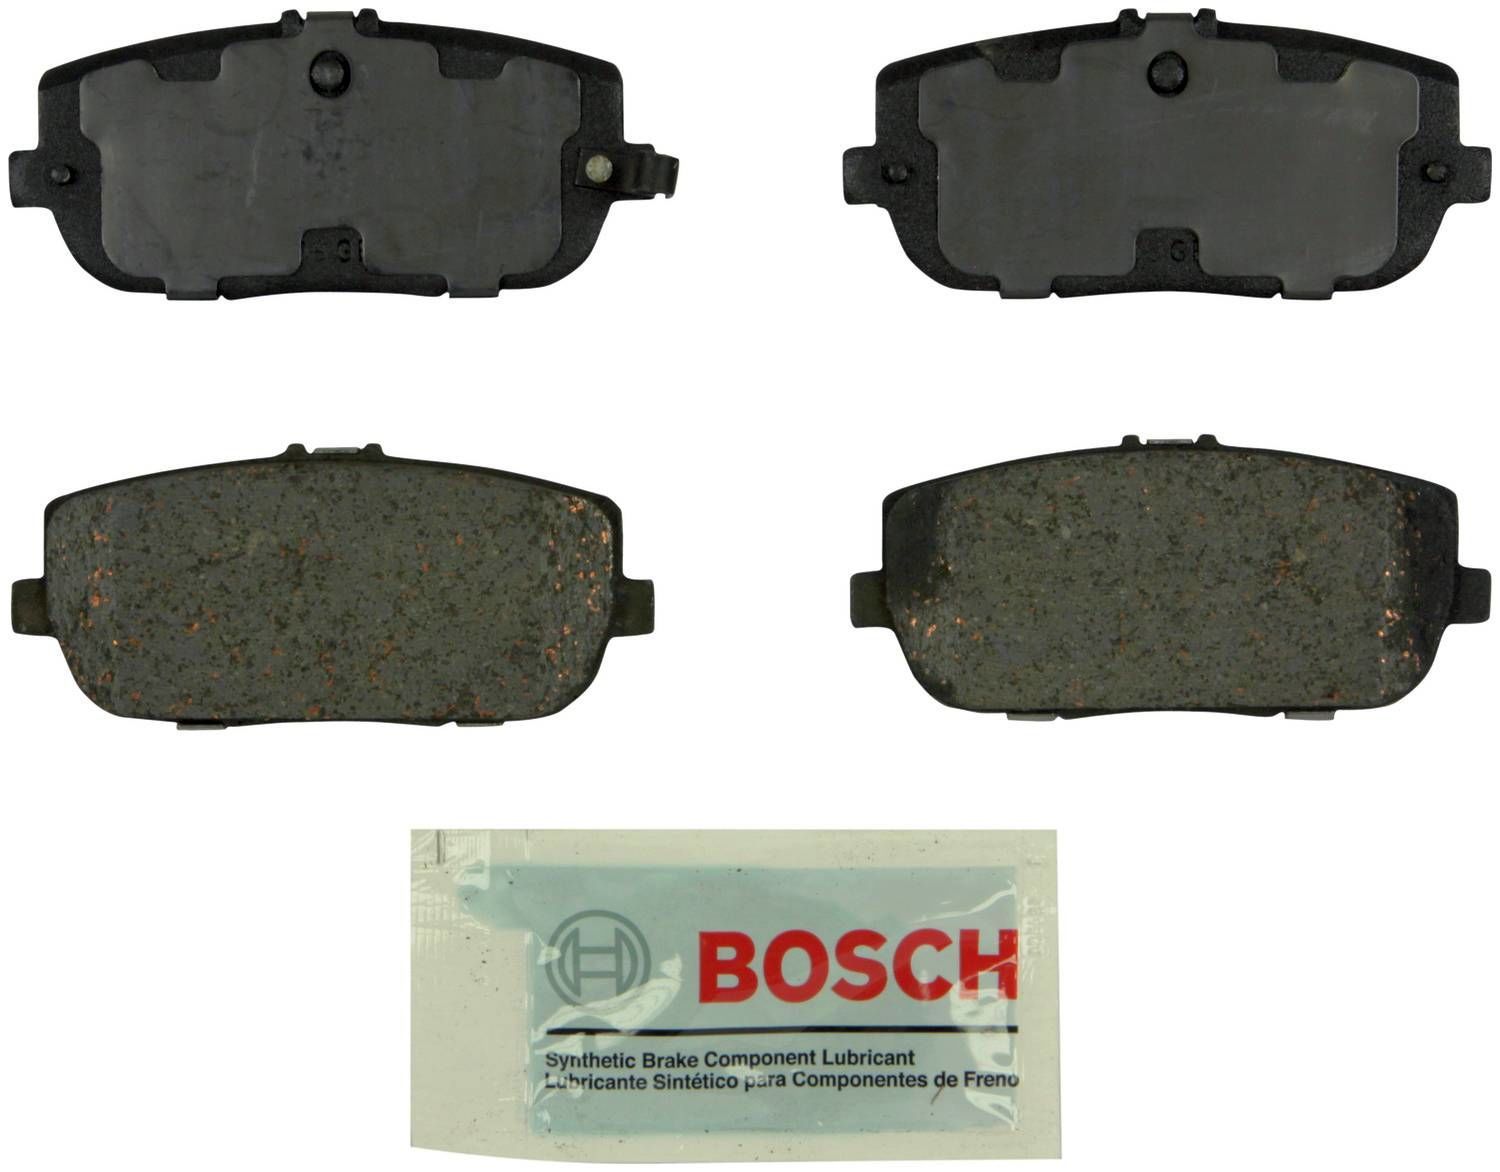 BOSCH BRAKE - Bosch Blue Ceramic Brake Pads (Rear) - BQC BE1180